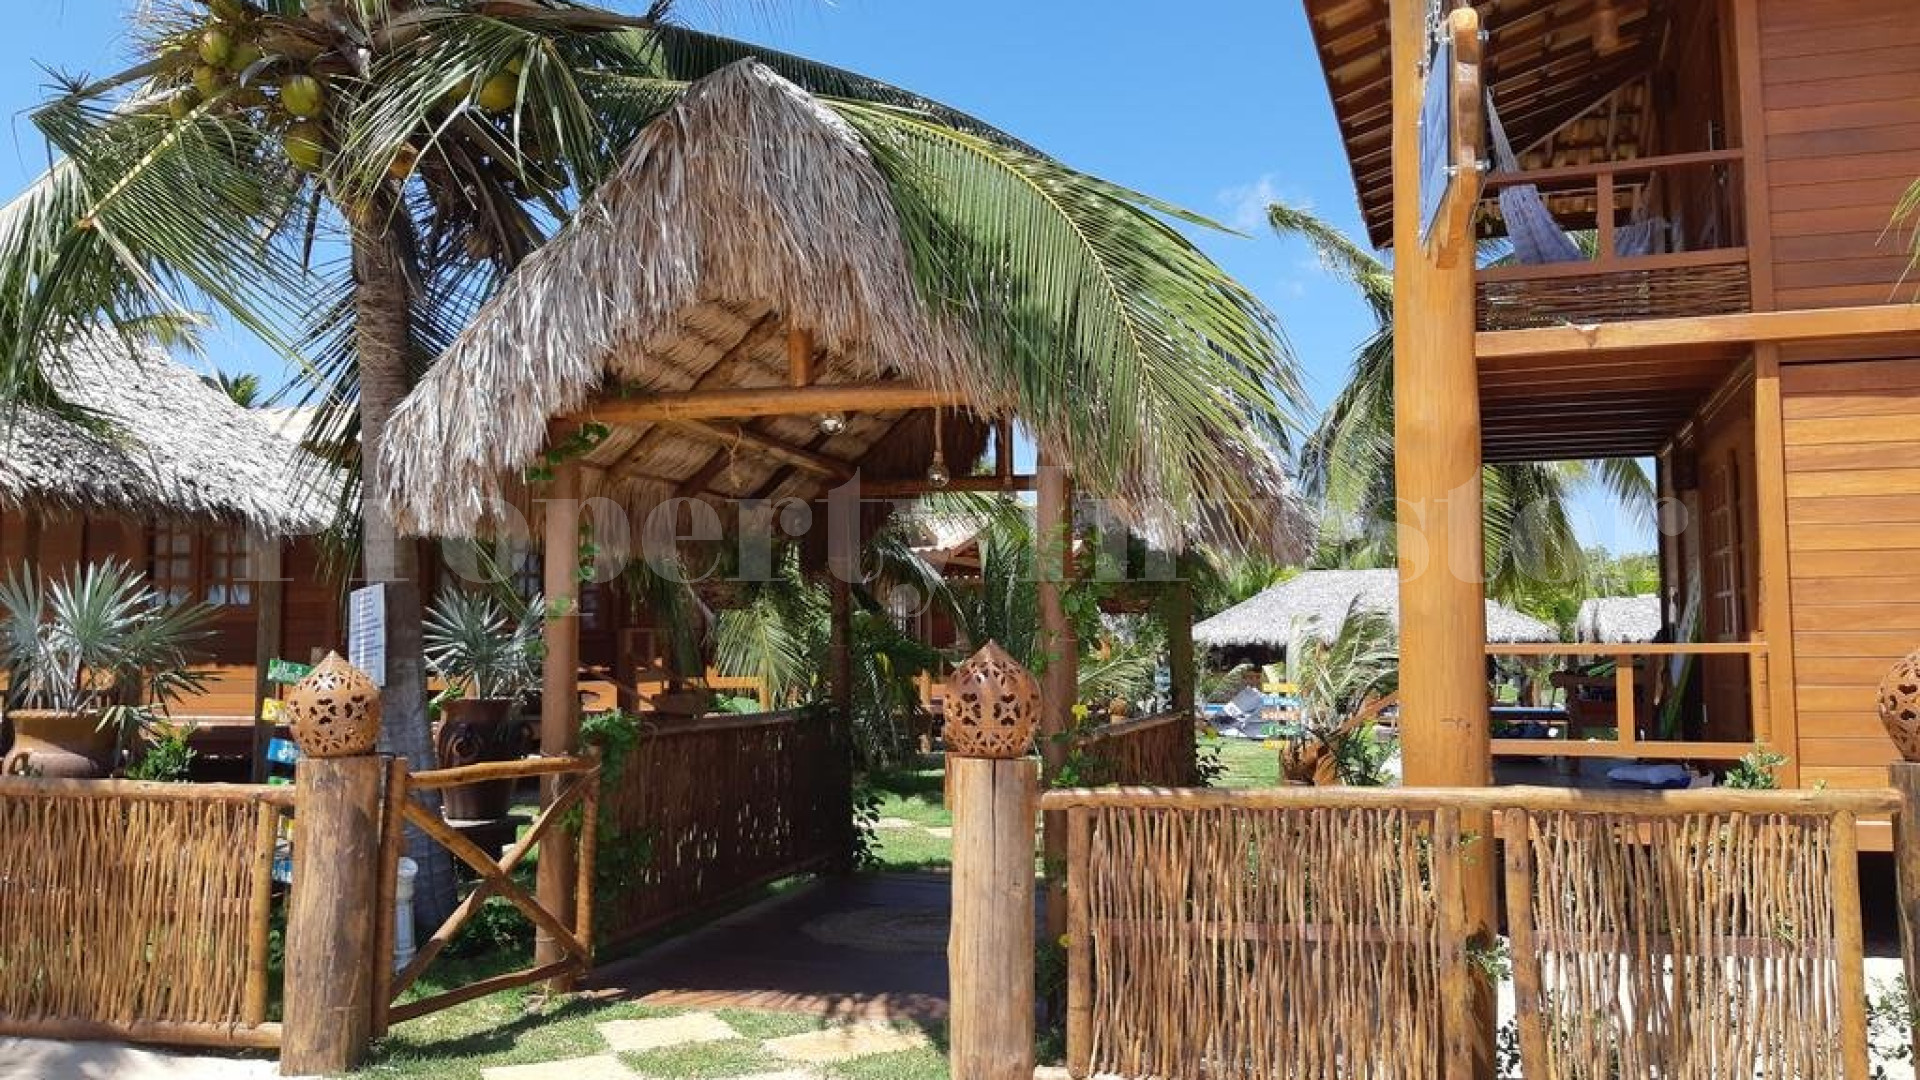 Fully Operational 10 Chalet Kite Surfing Hotel for Sale on Guajiru Island, Brazil